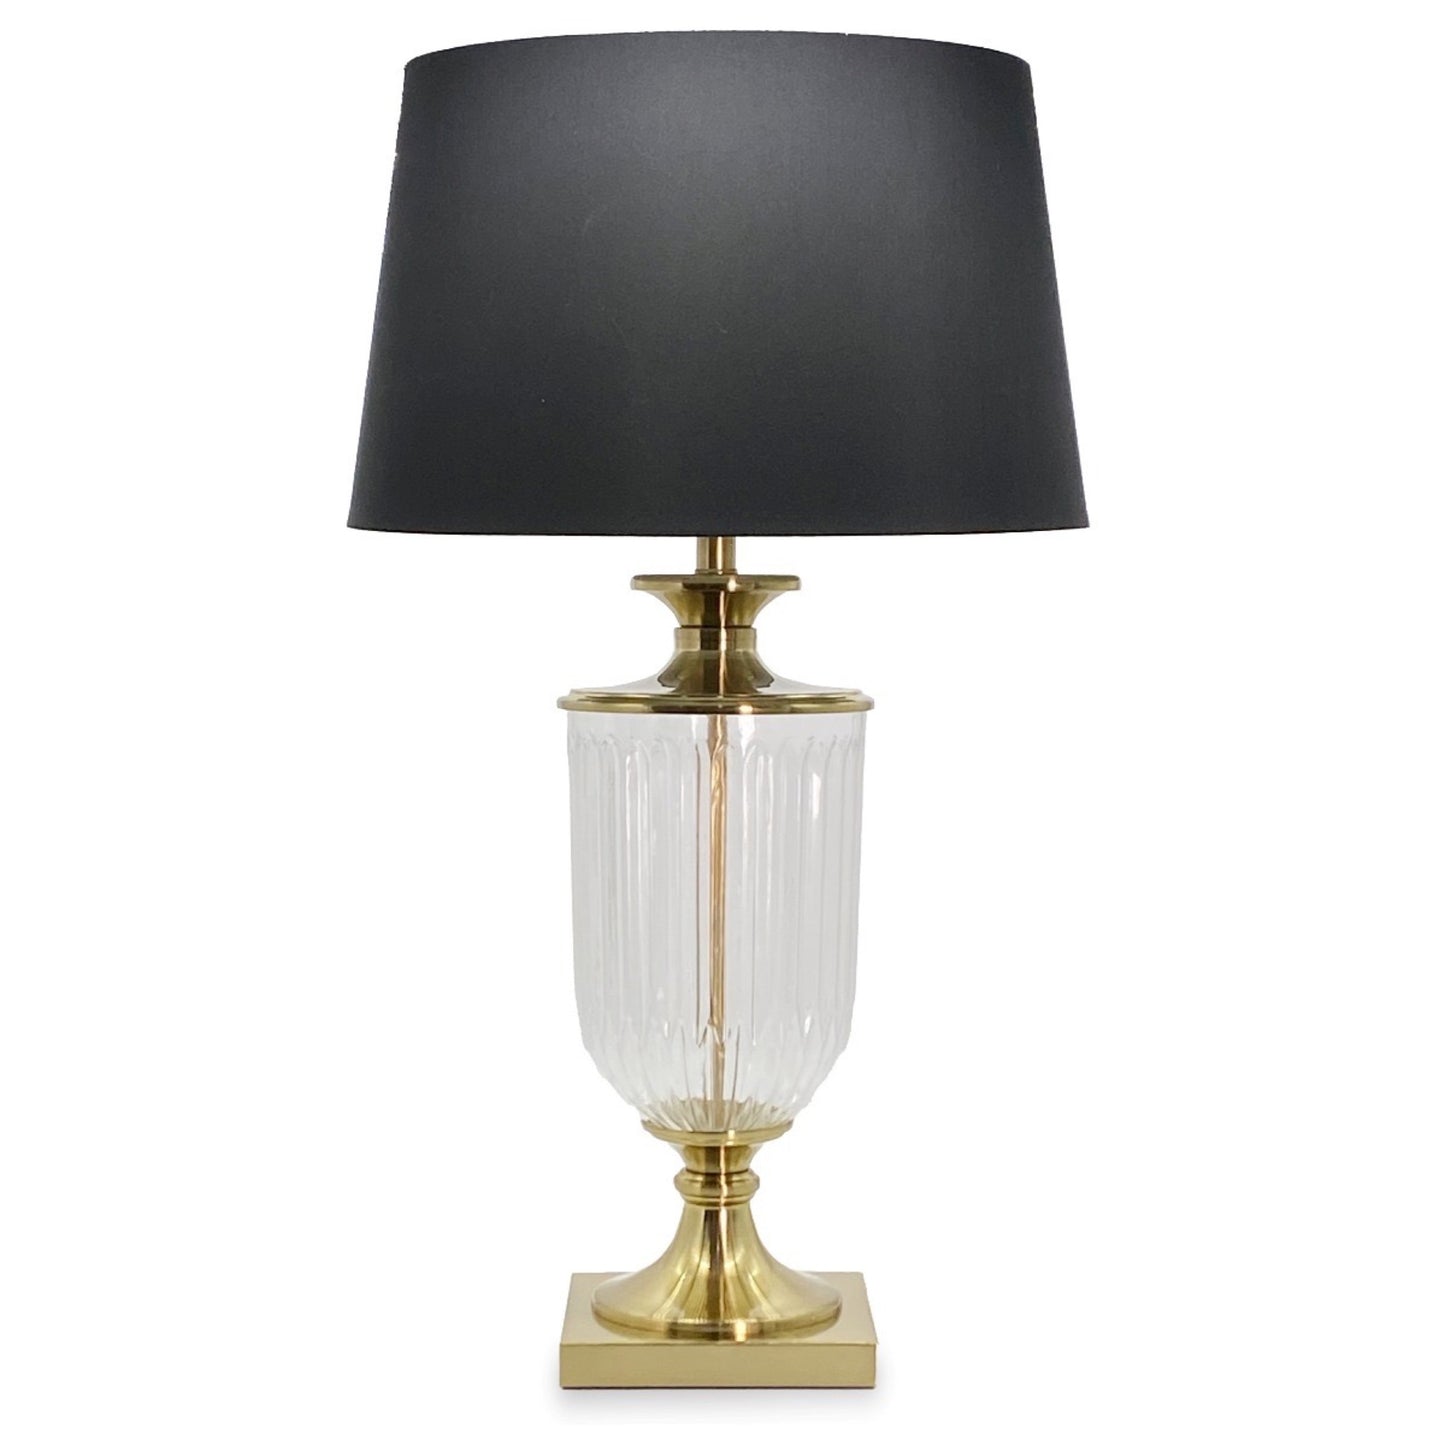 Malta Lamp